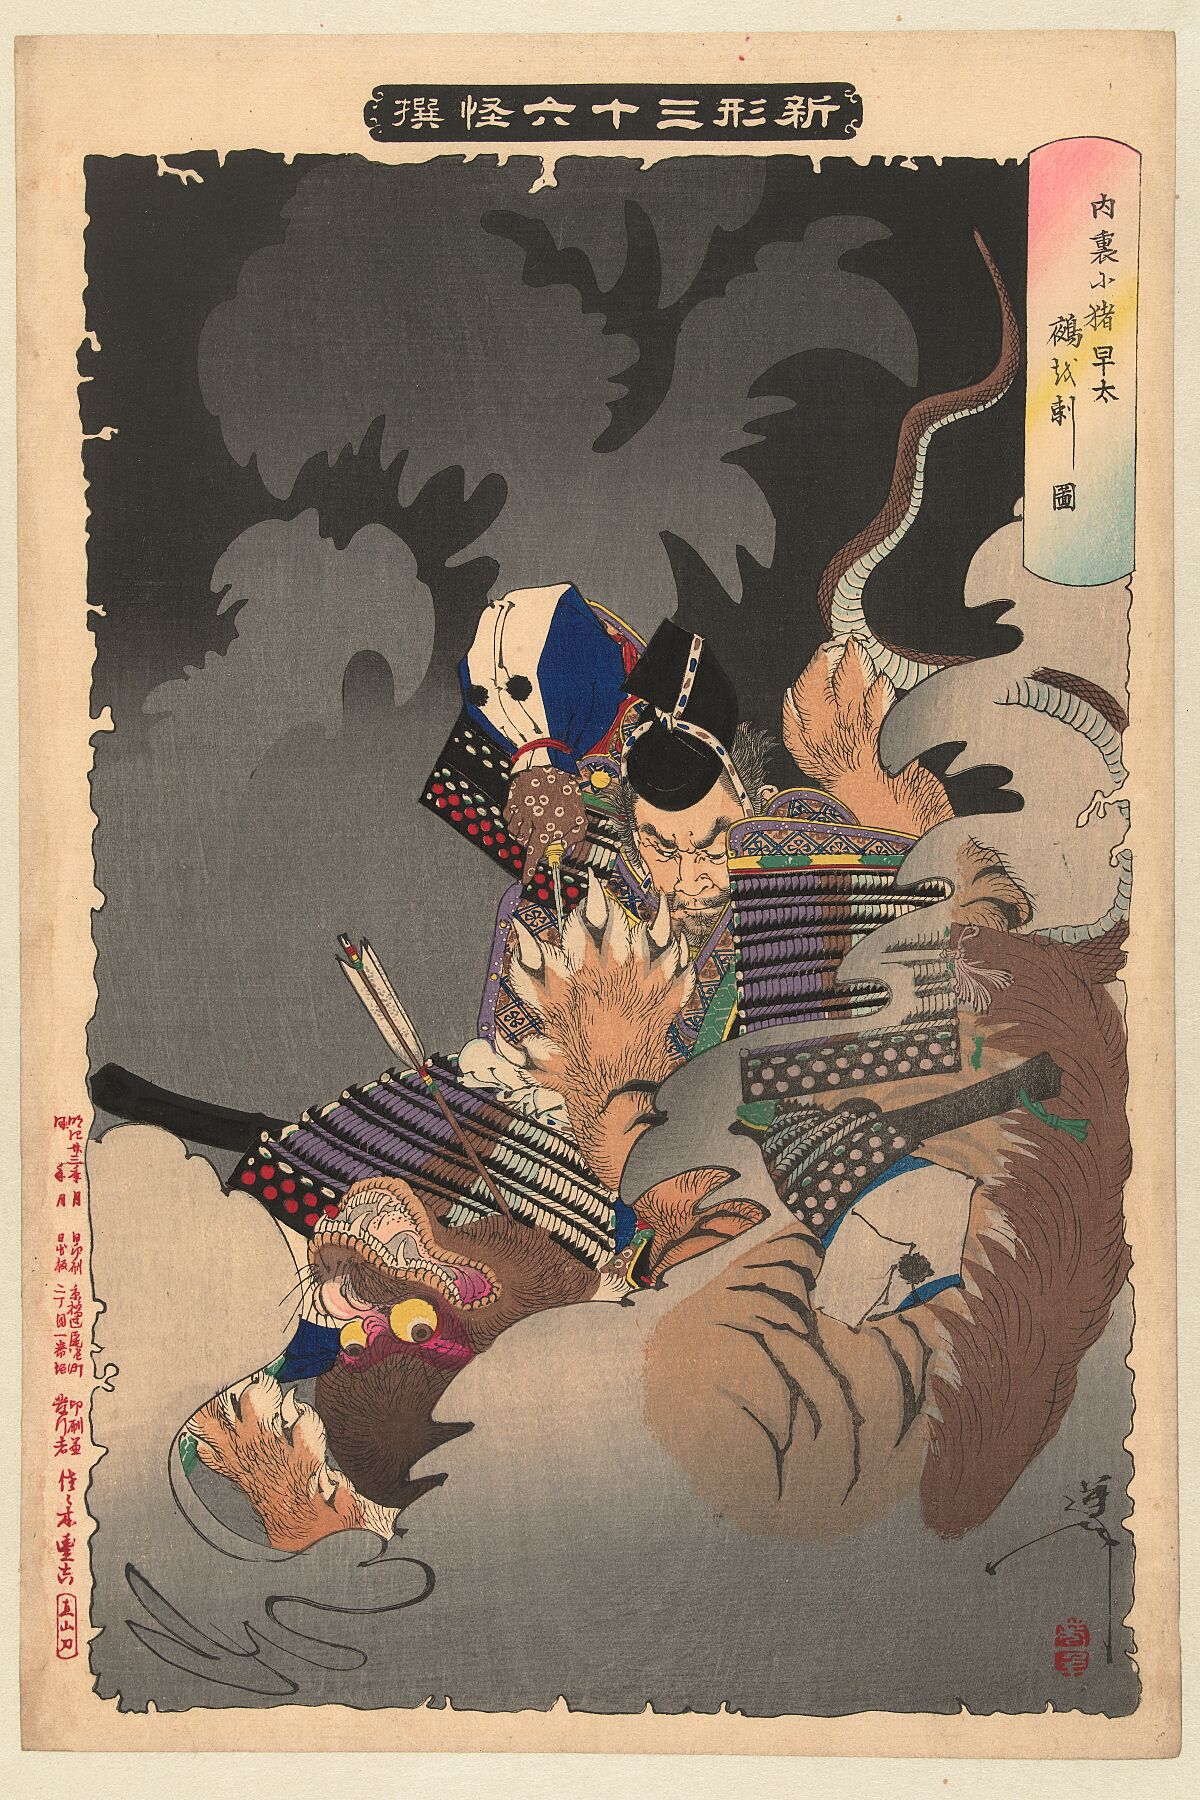 Ii no Hayata slaying a monster at the Imperial Palace, Tsukioka Yoshitoshi, 1890